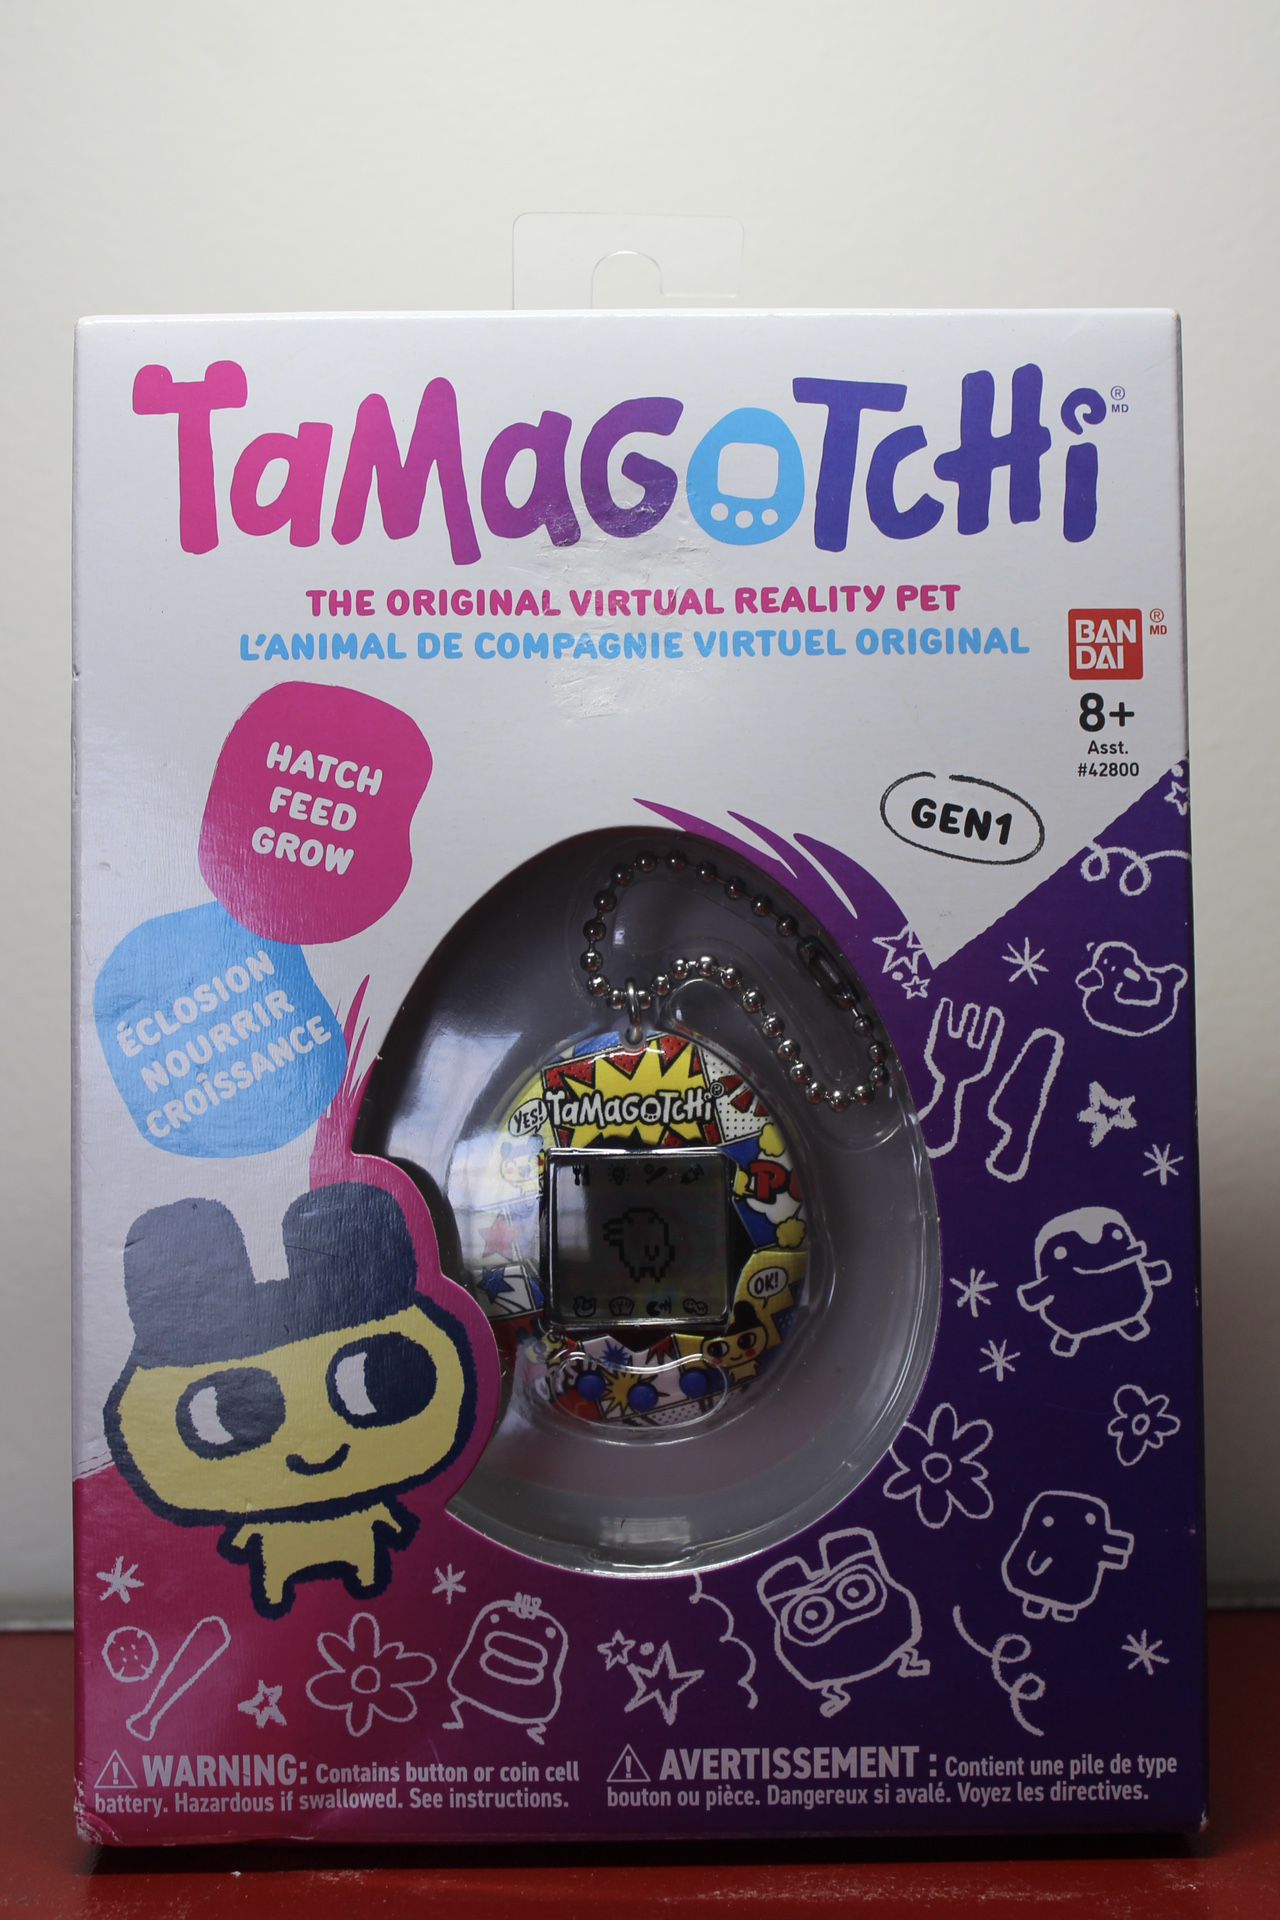 Original Tamagotchi - The Original Virtual Reality Pet - Gen1